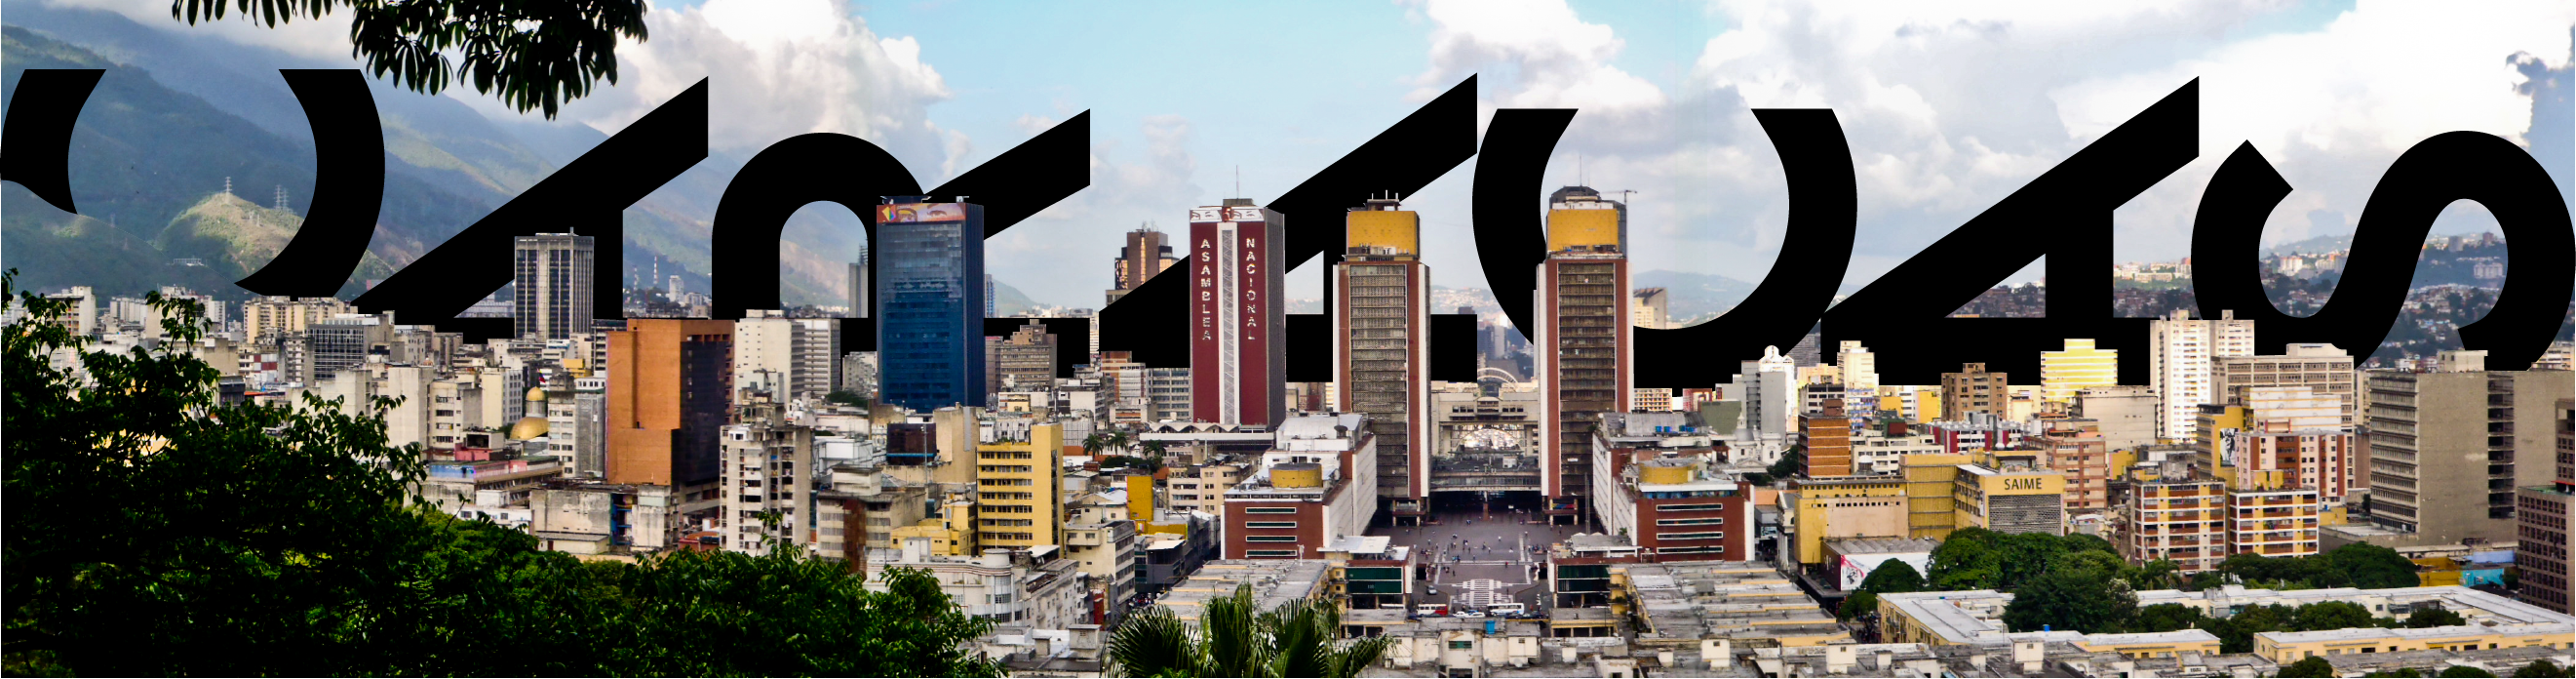 Caracas letras negras vertical.png